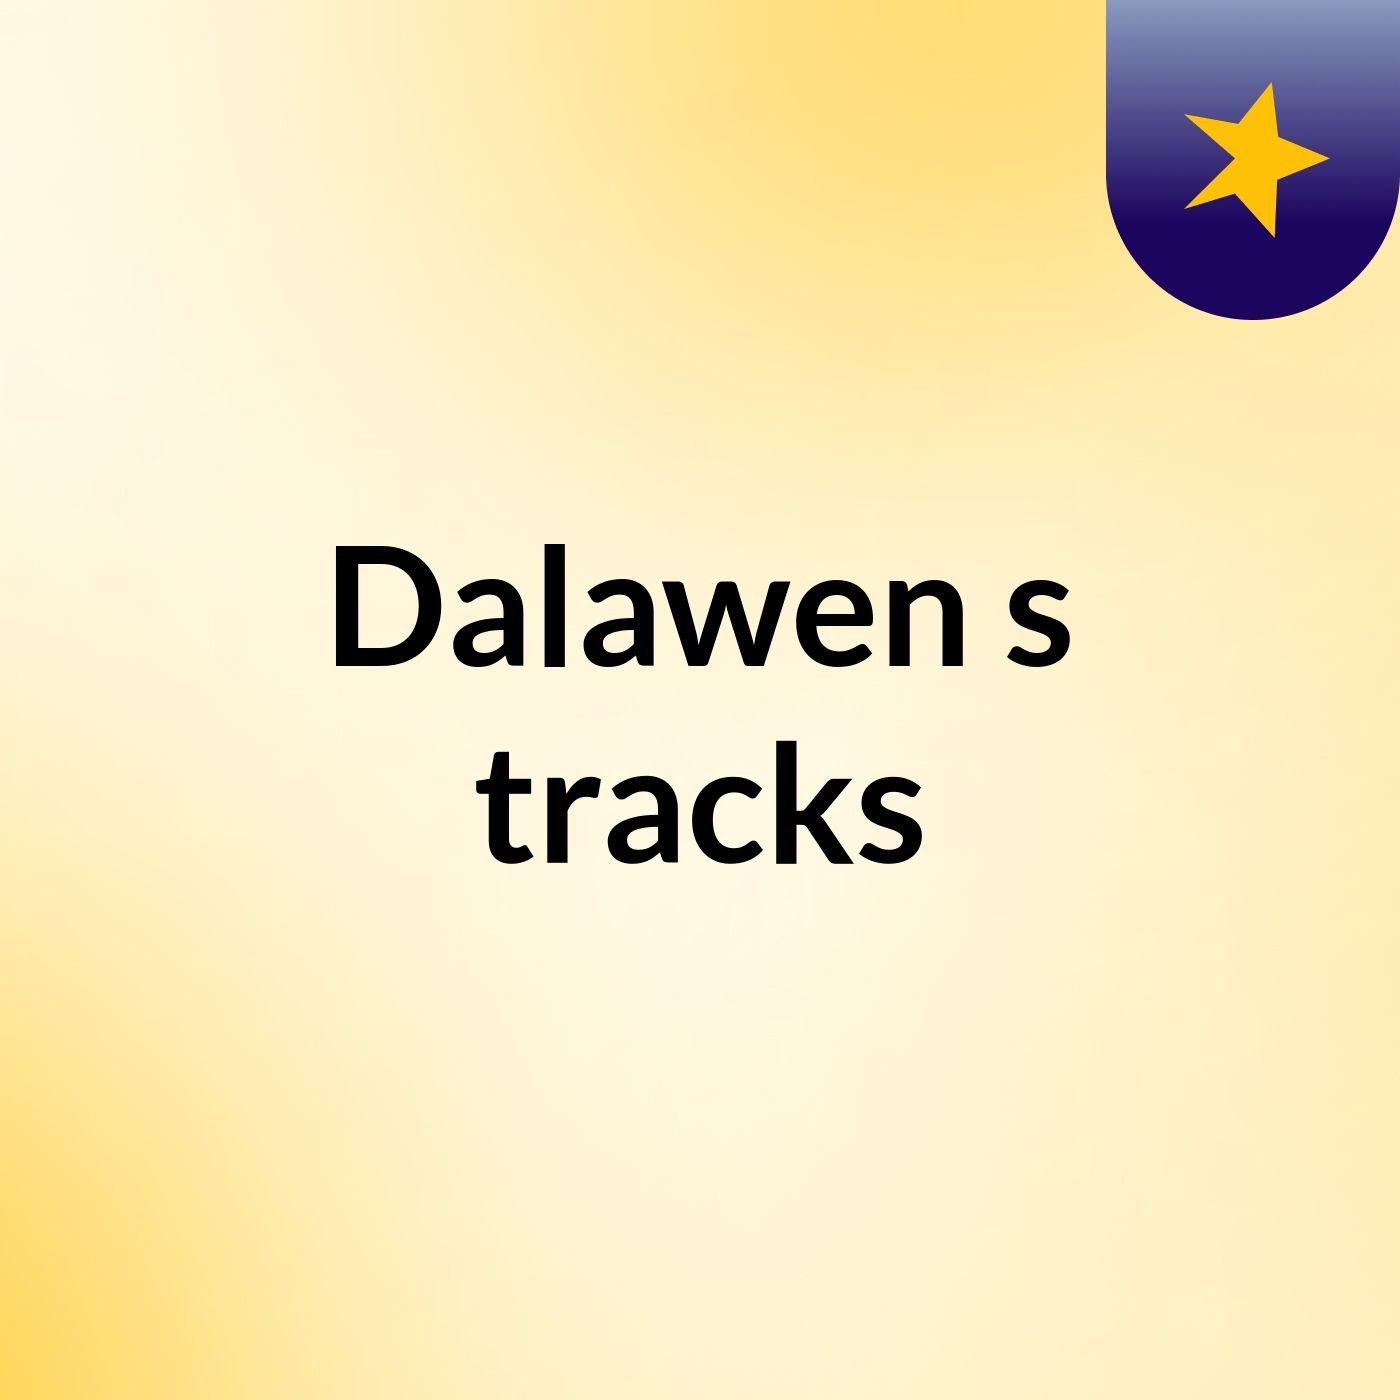 Dalawen's tracks